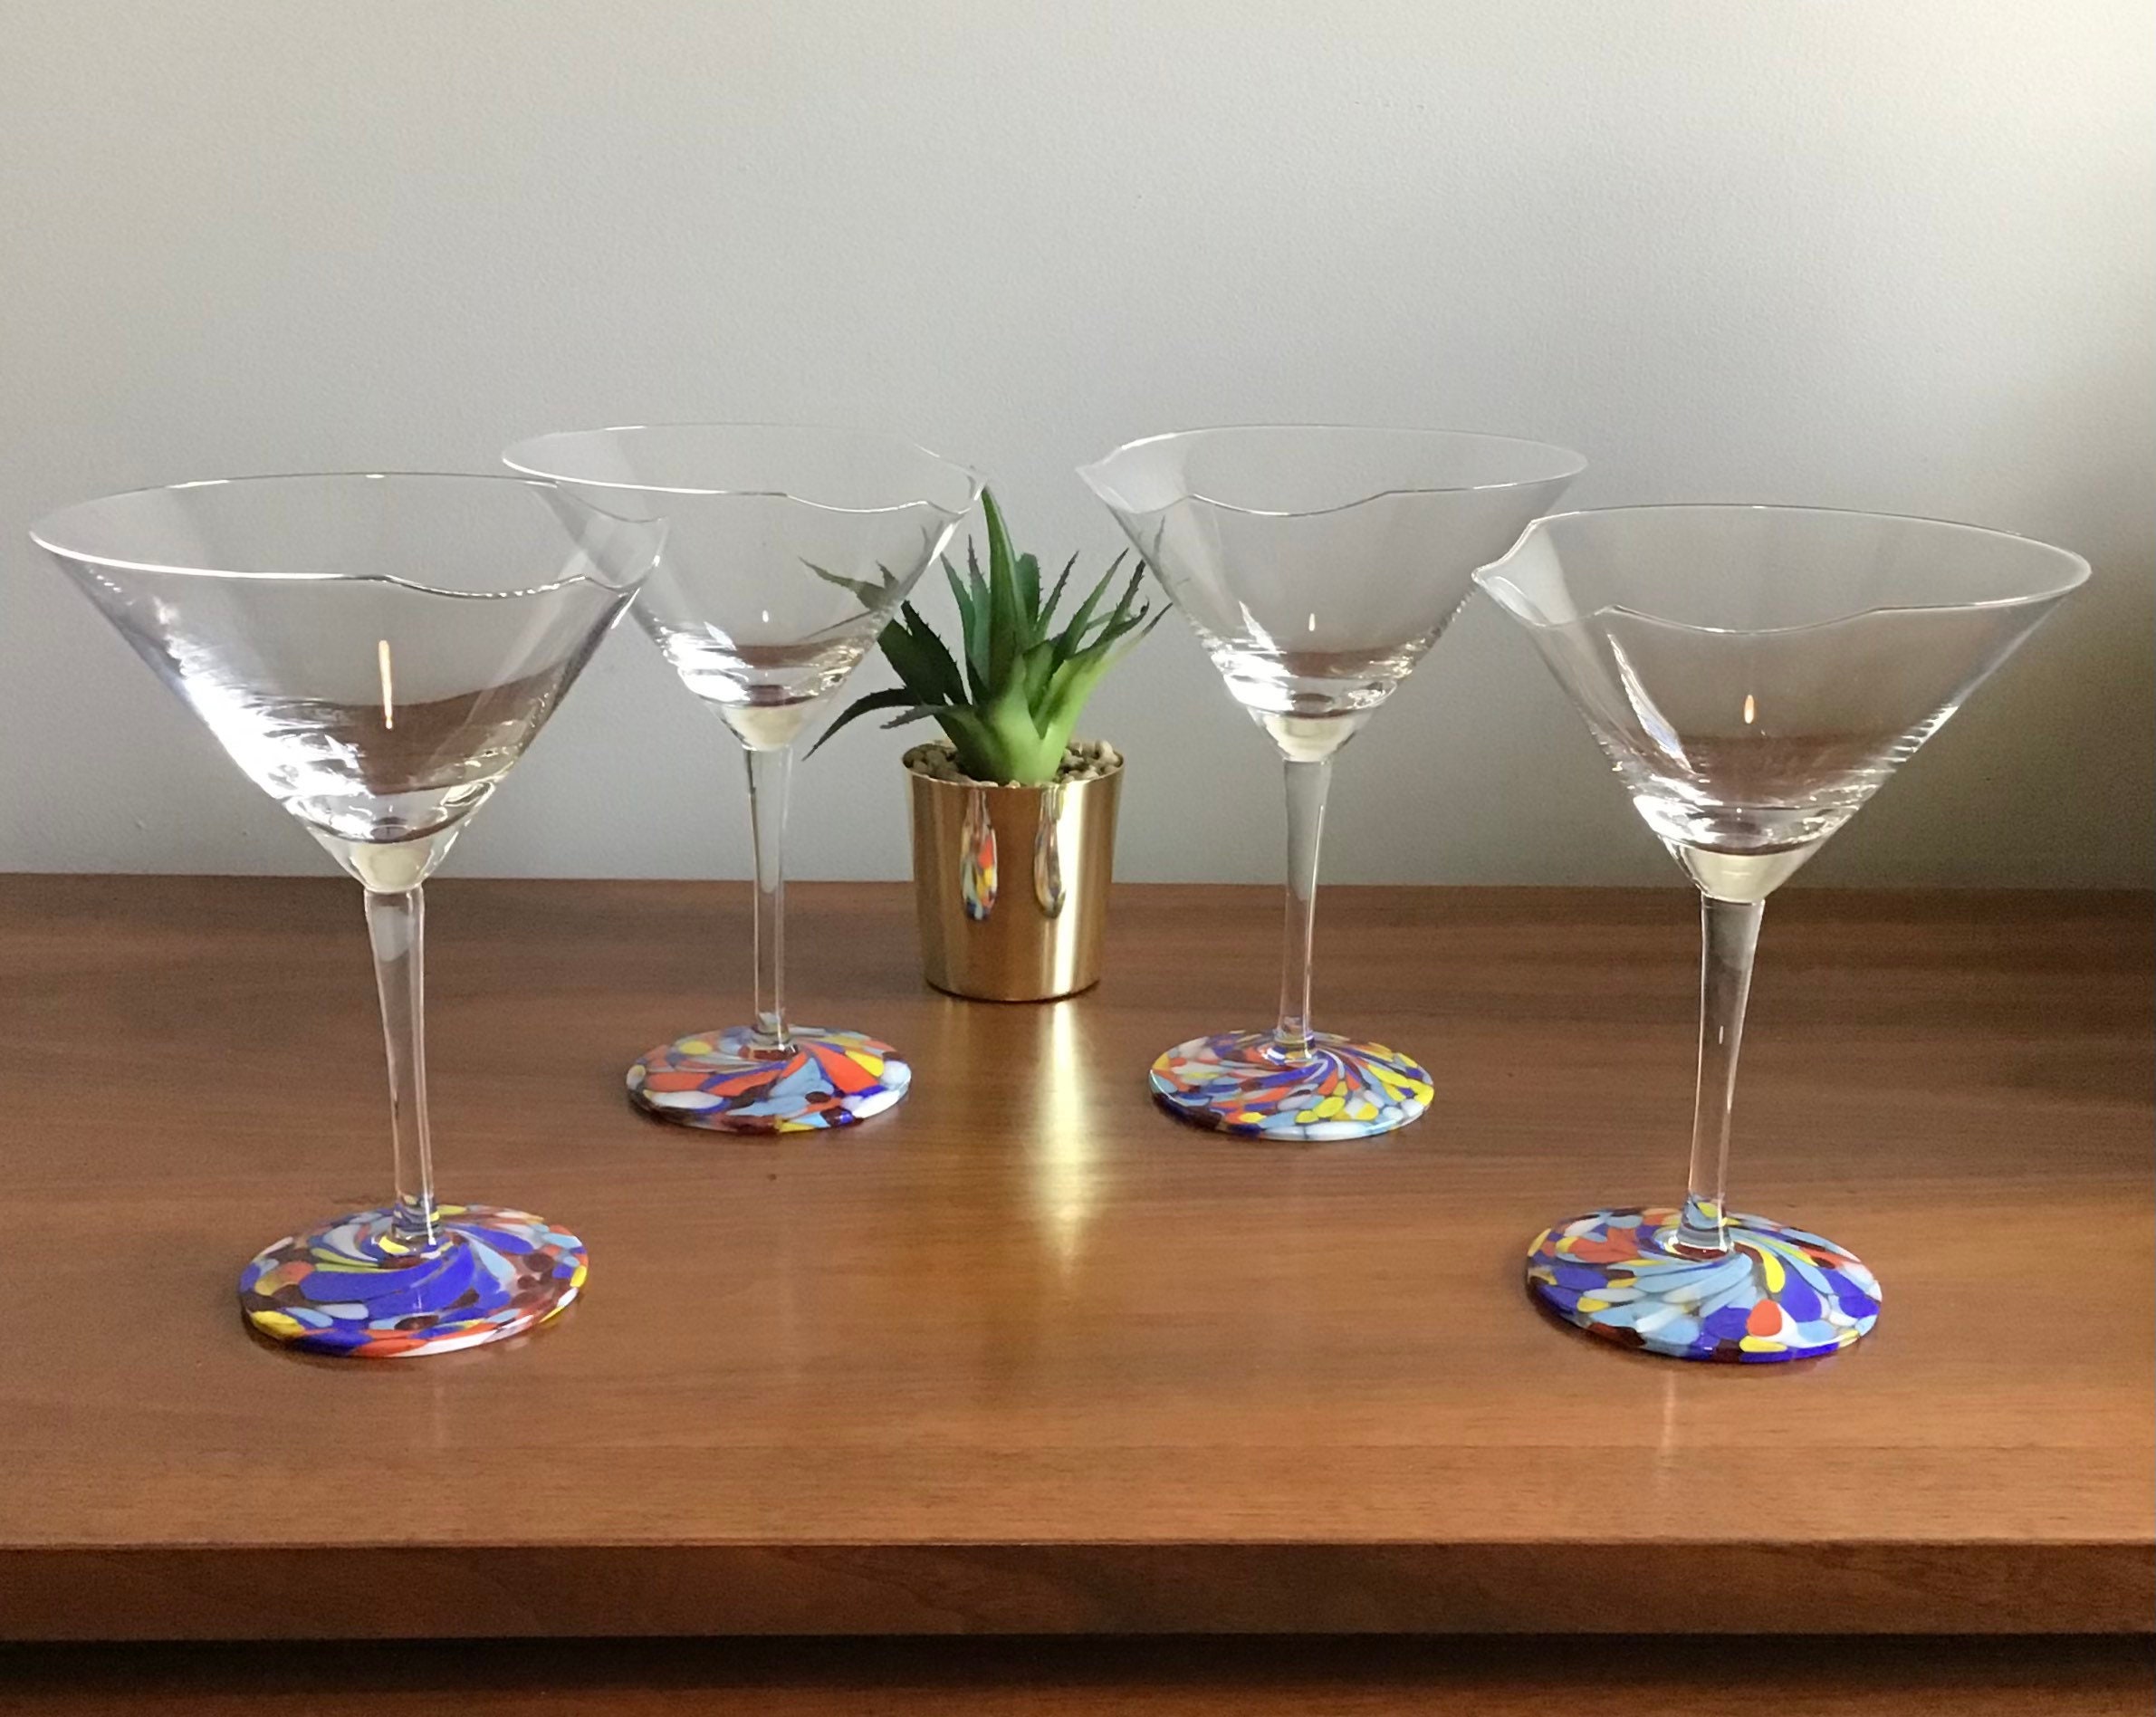 Patina Vie Vintage Colorful Martini Glasses, S/7